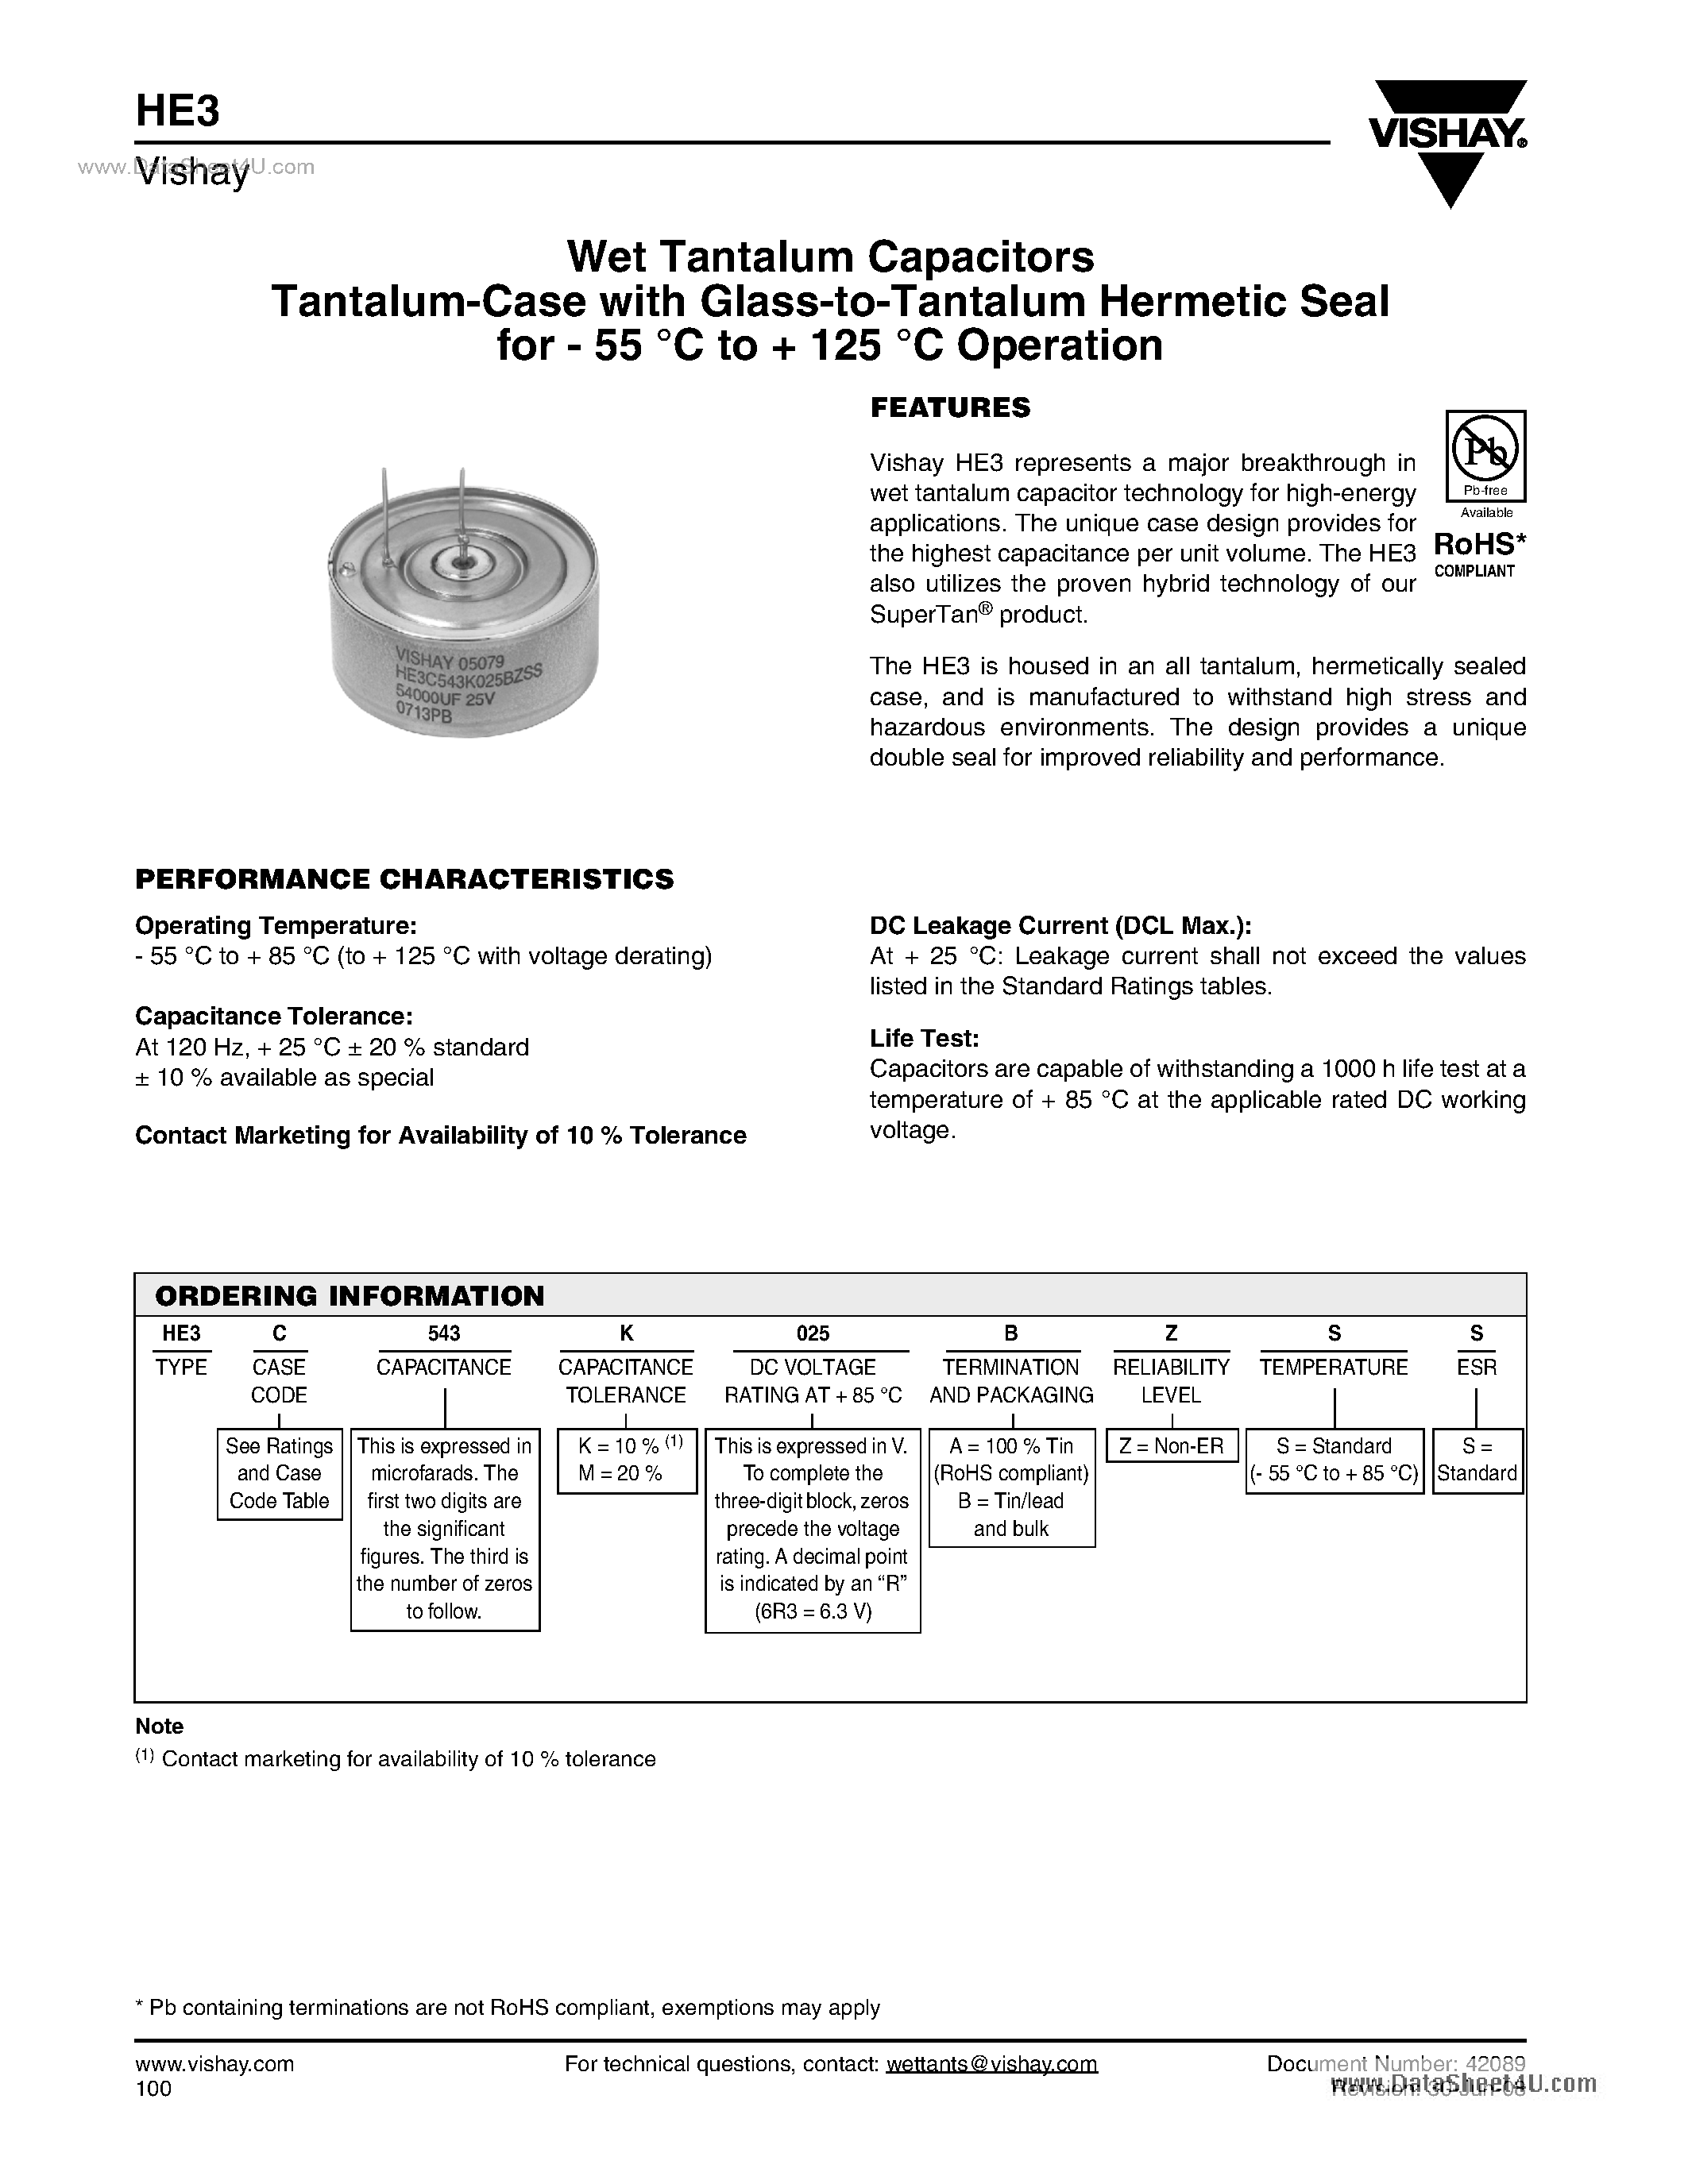 Datasheet HE3 - Wet Tantalum Capacitors Tantalum-Case page 1